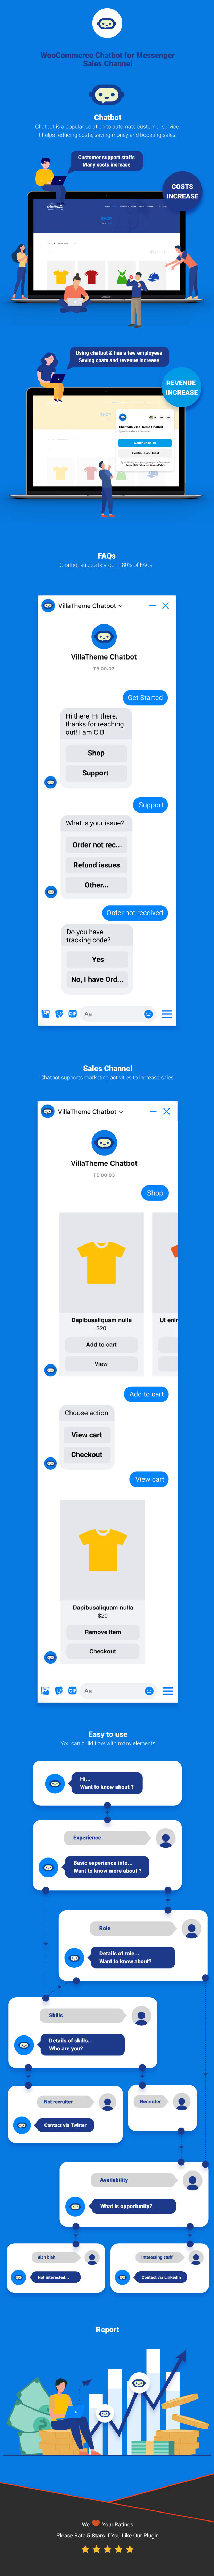 WooCommerce Chatbot for Messenger - Sales Channel